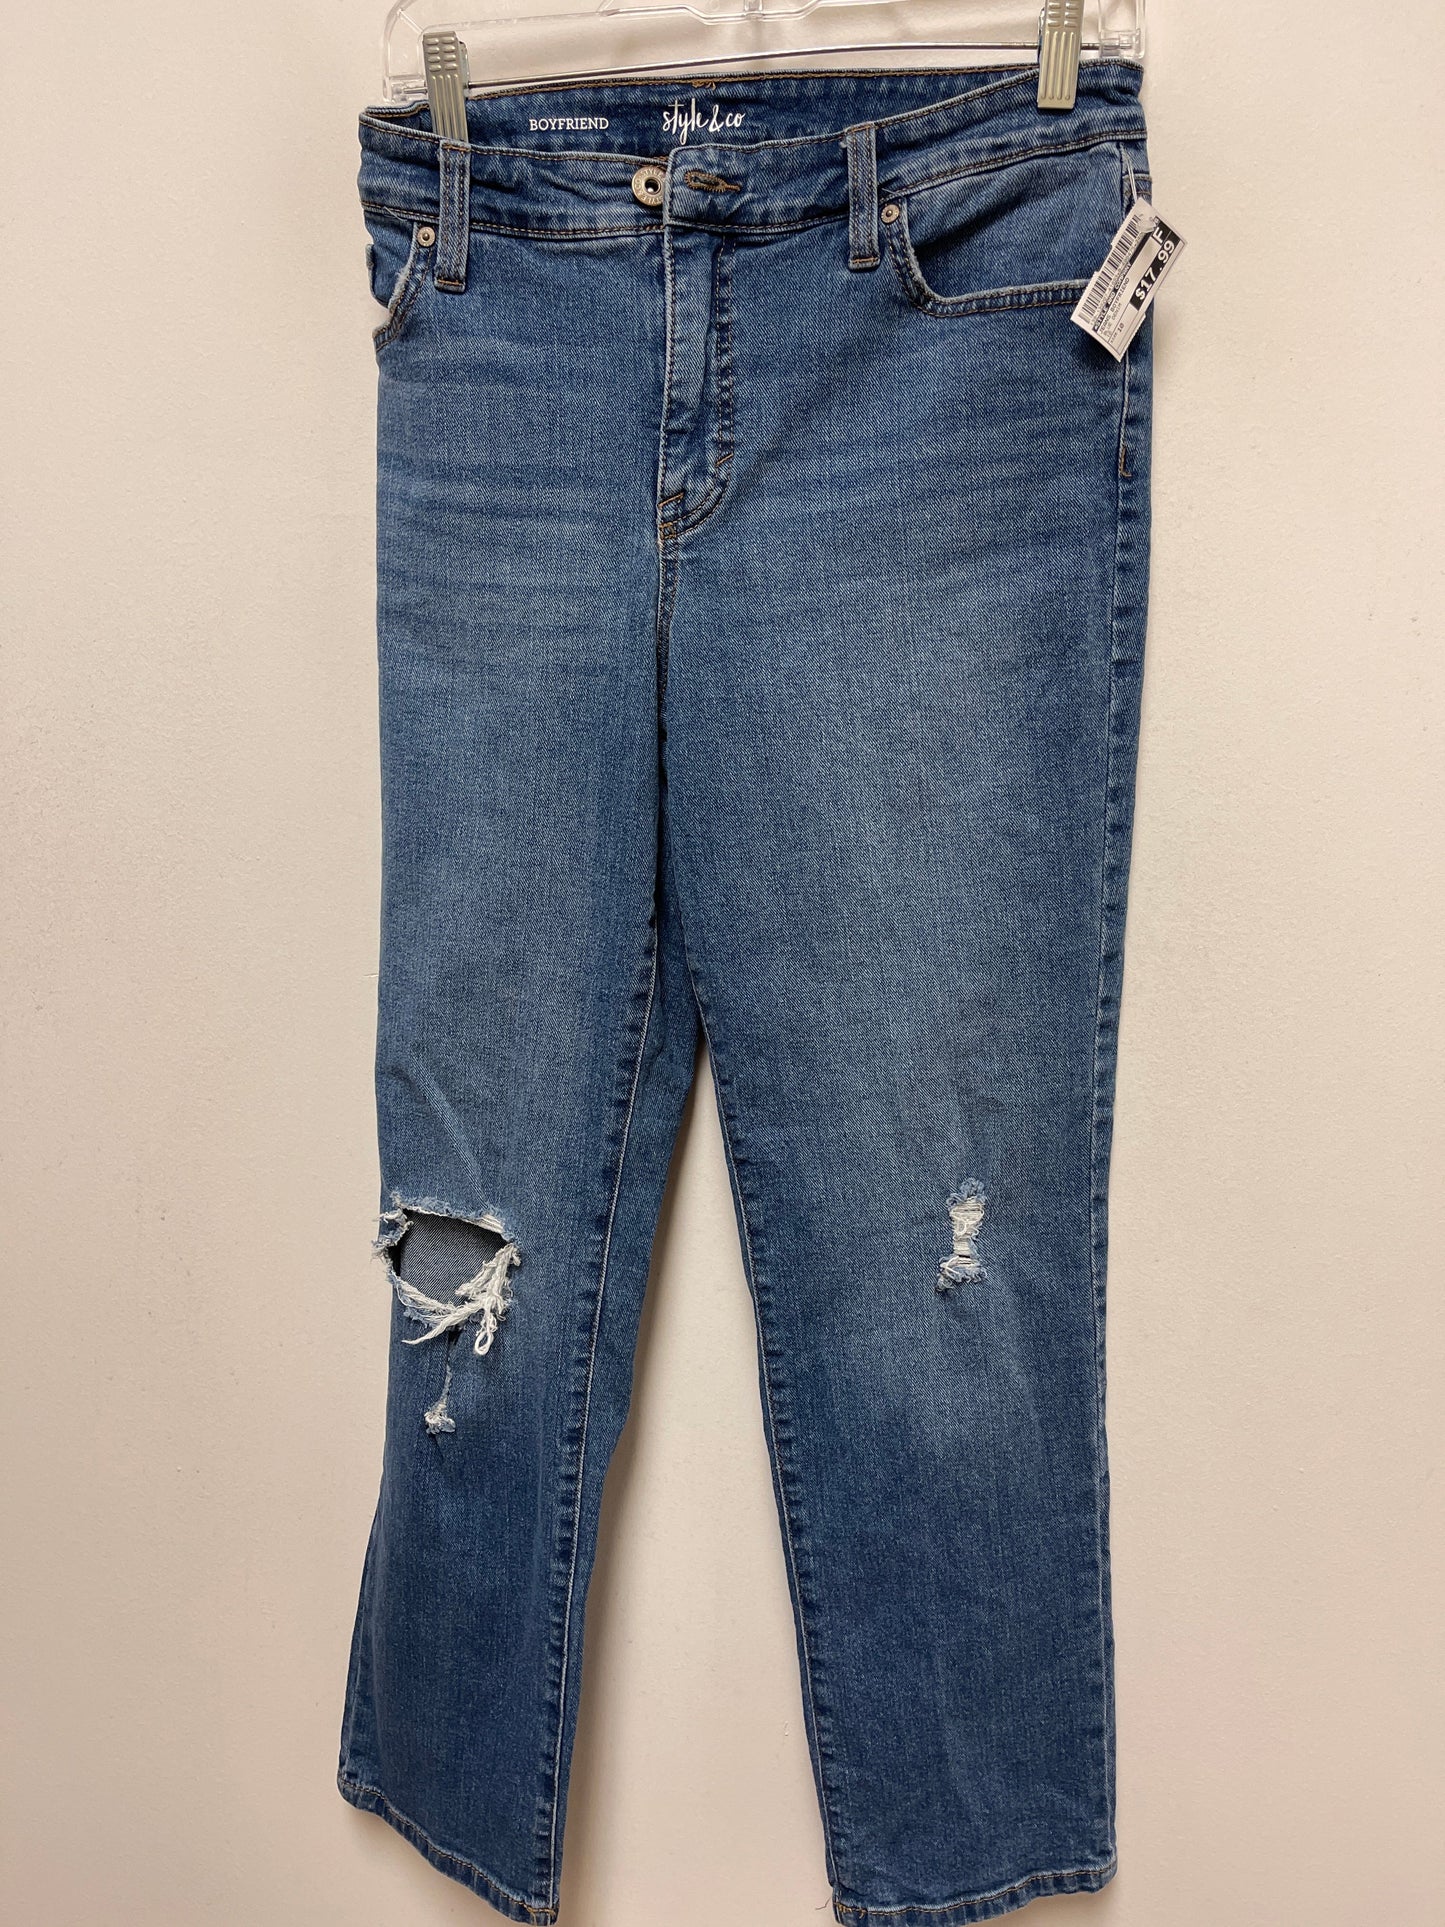 Blue Denim Jeans Boyfriend Style And Company, Size 10